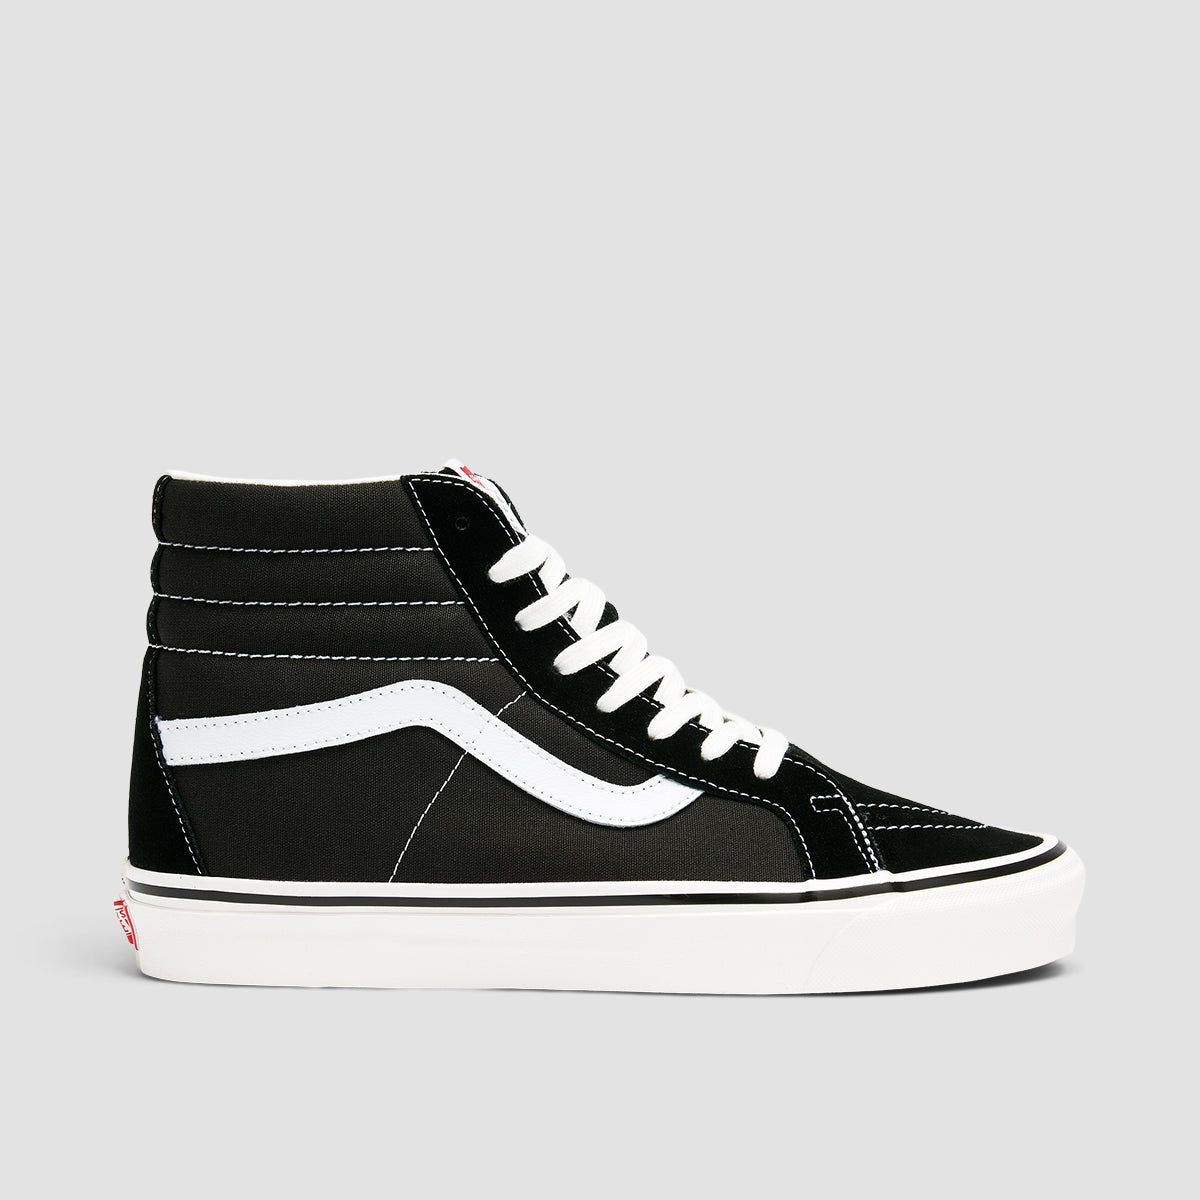 Vans SK8-Hi 38 DX High Top Shoes - Anaheim Factory Black/True White